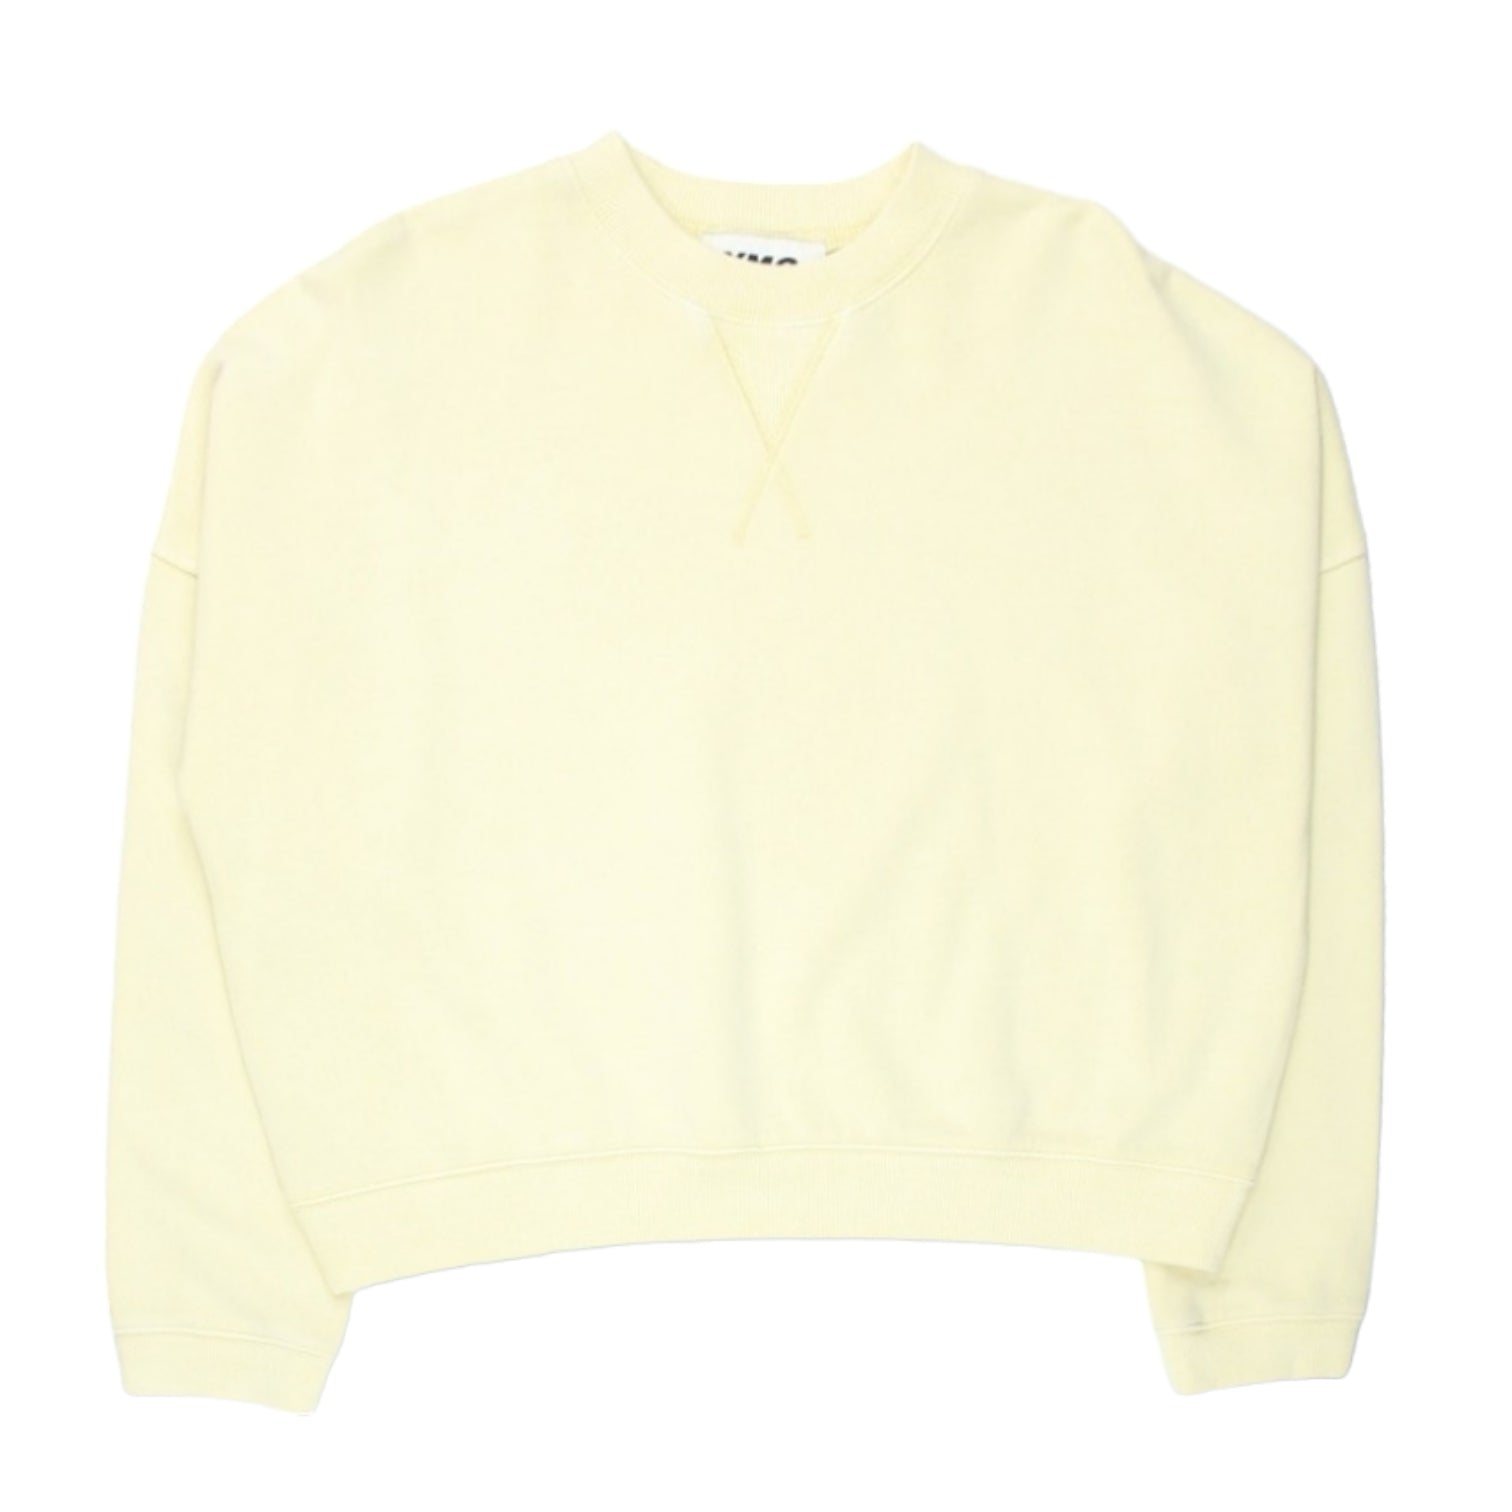 YMC Pale Lemon Sweatshirt